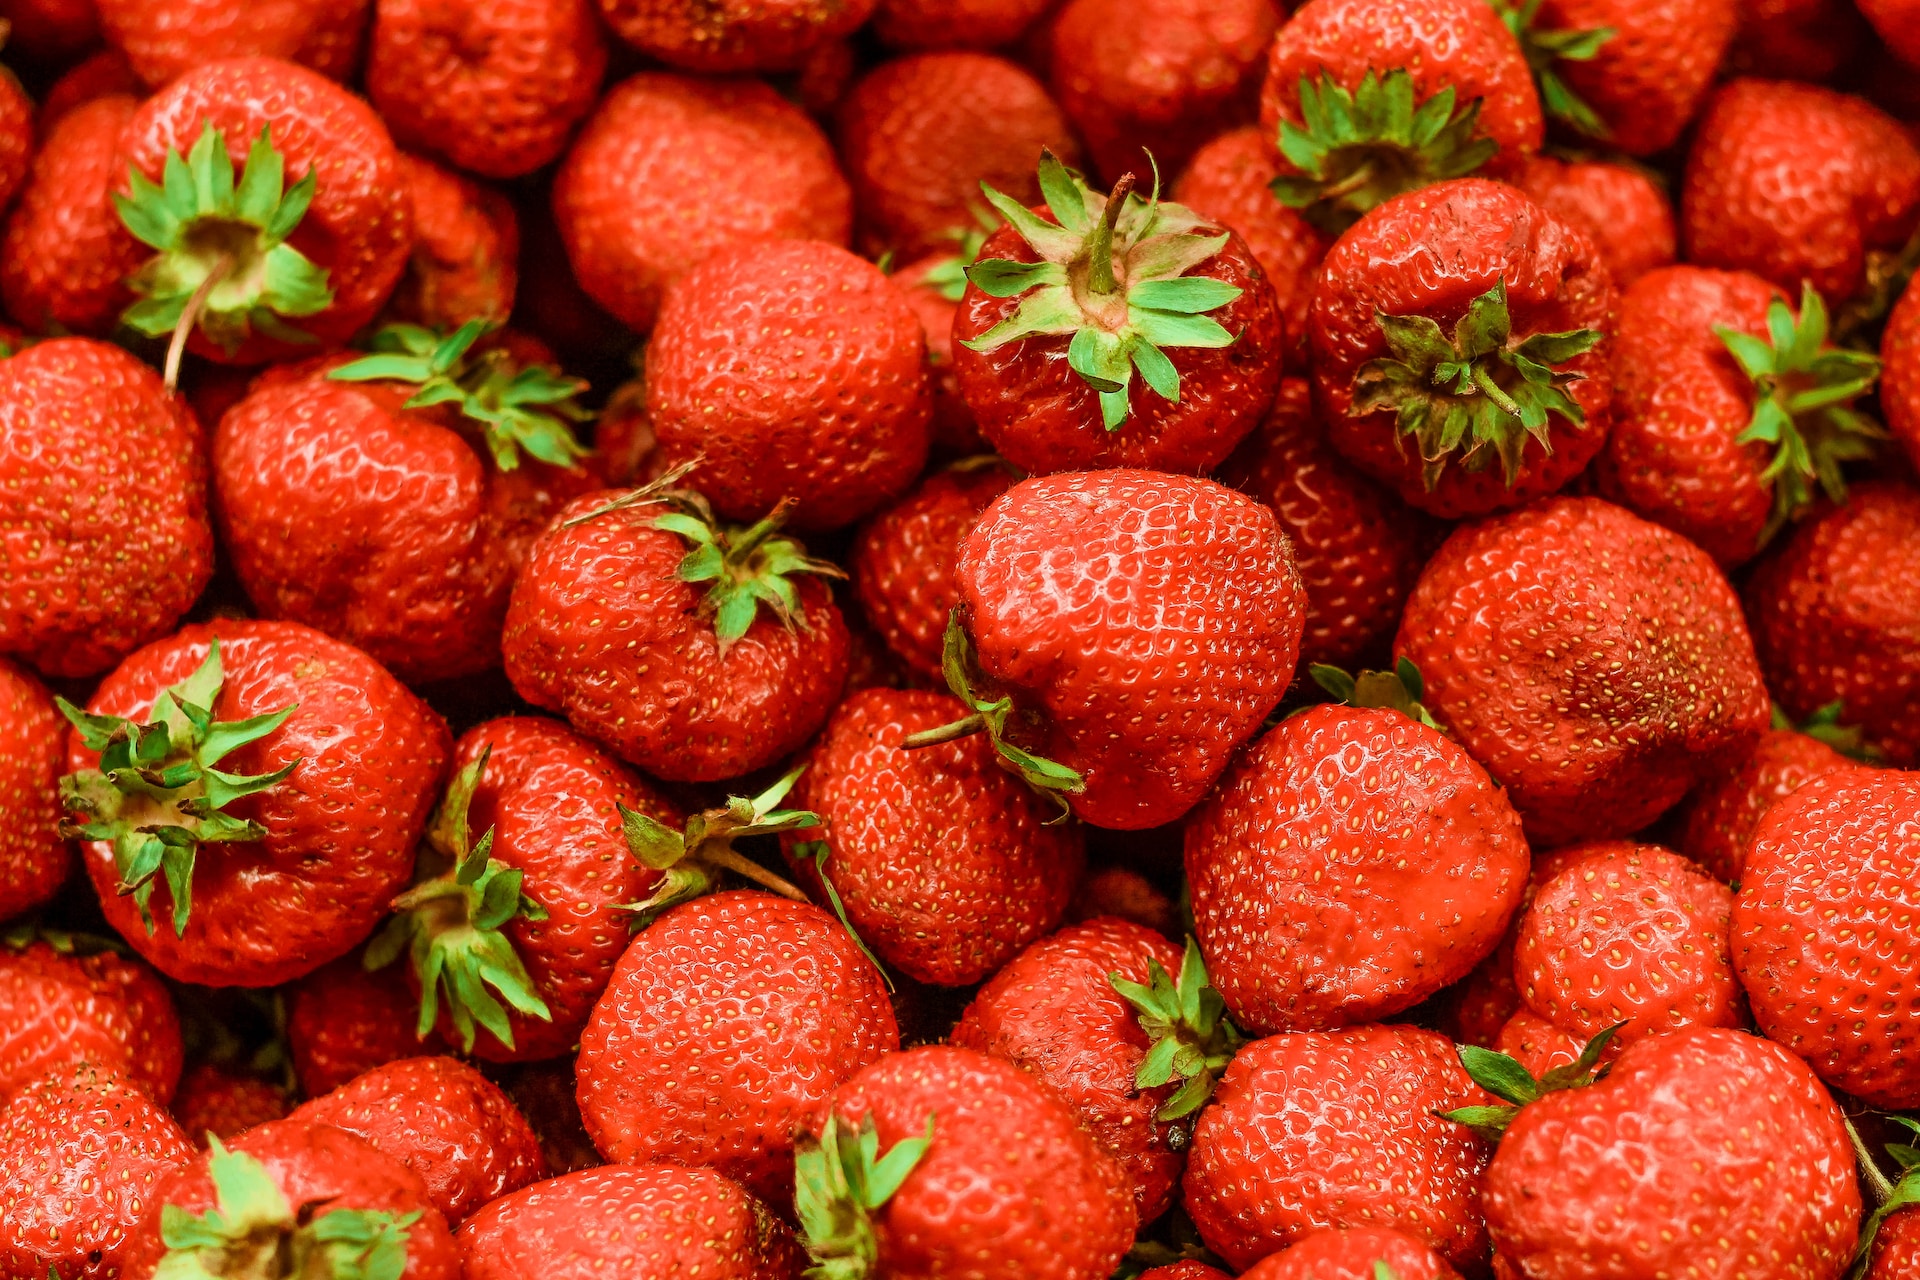 strawberries close up